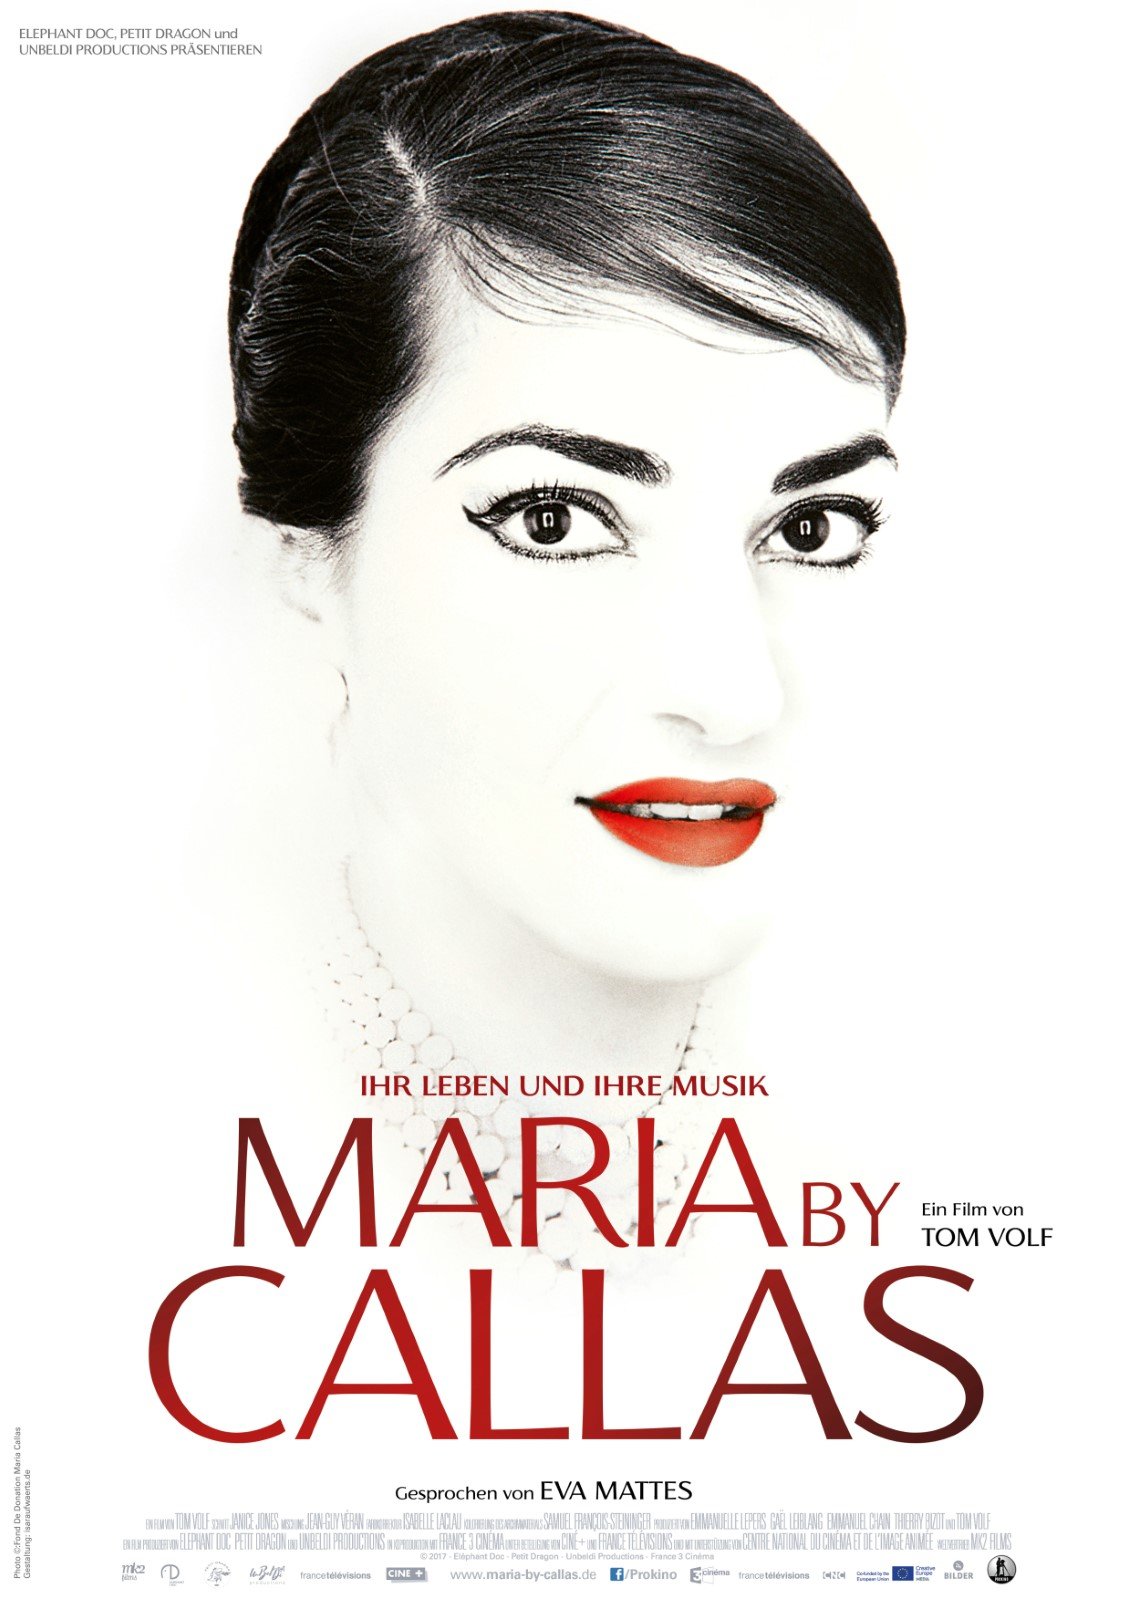 Wer streamt Maria by Callas? openload kkiste kinox